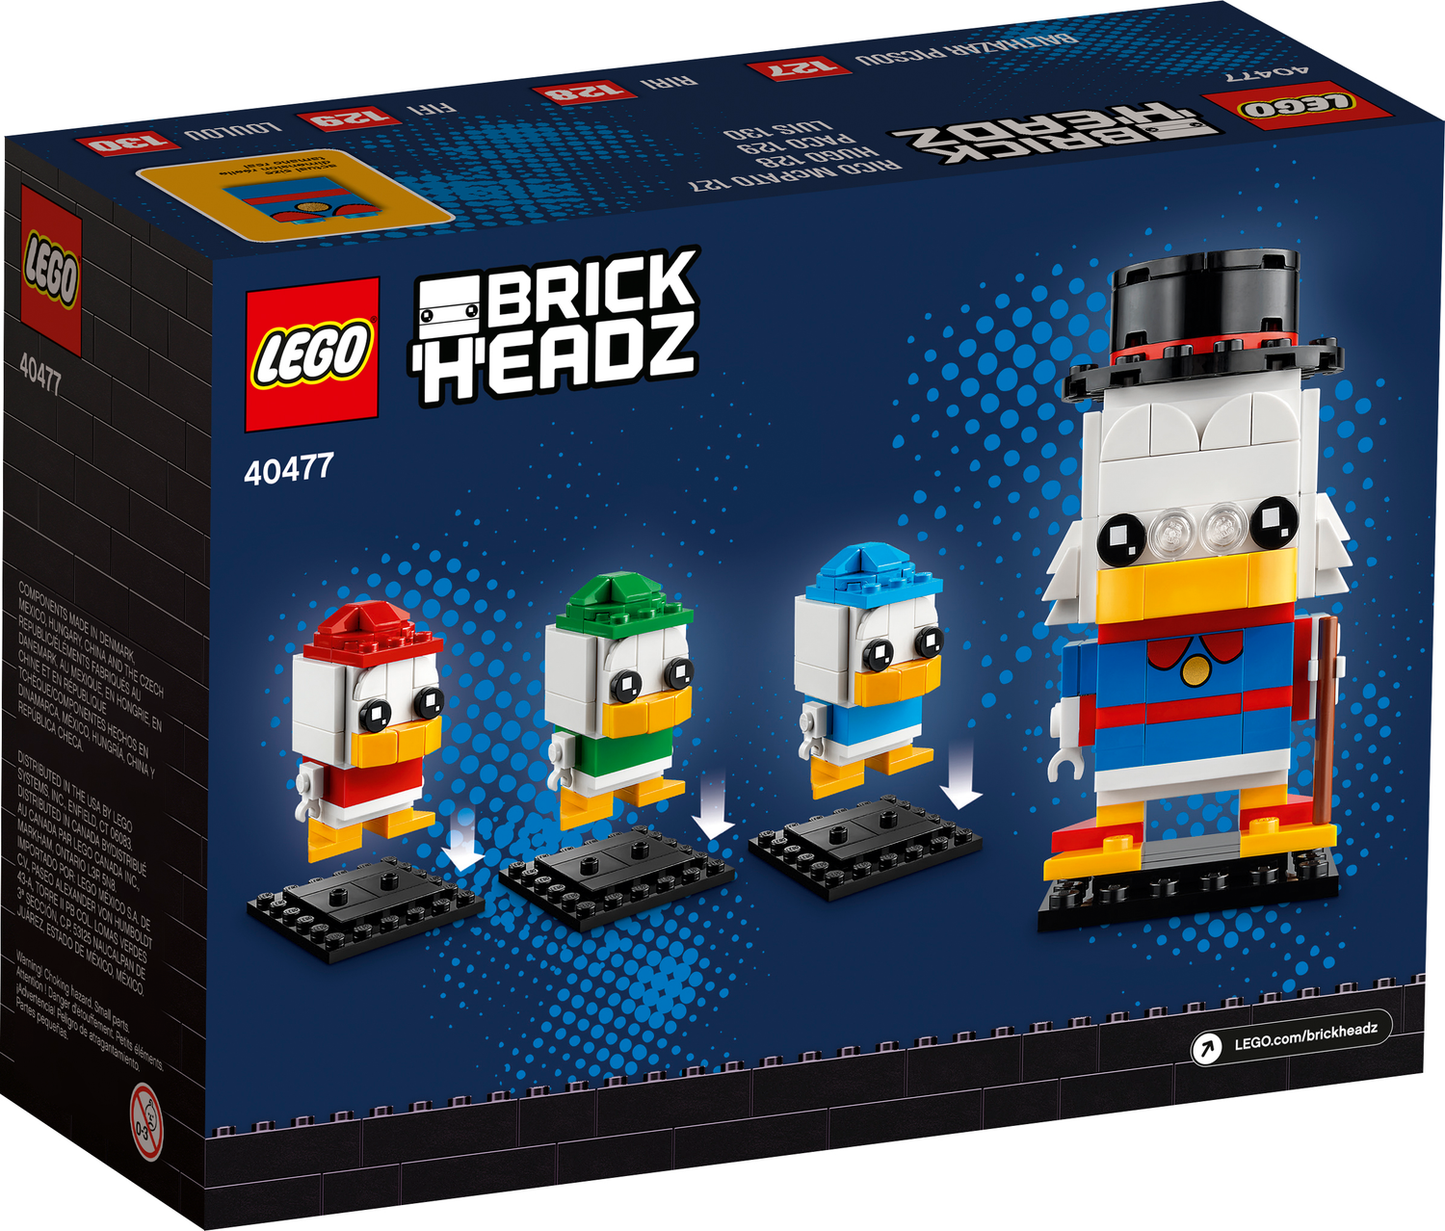 BrickHeadz 40477 Dagobert Duck, Tick, Trick & Track